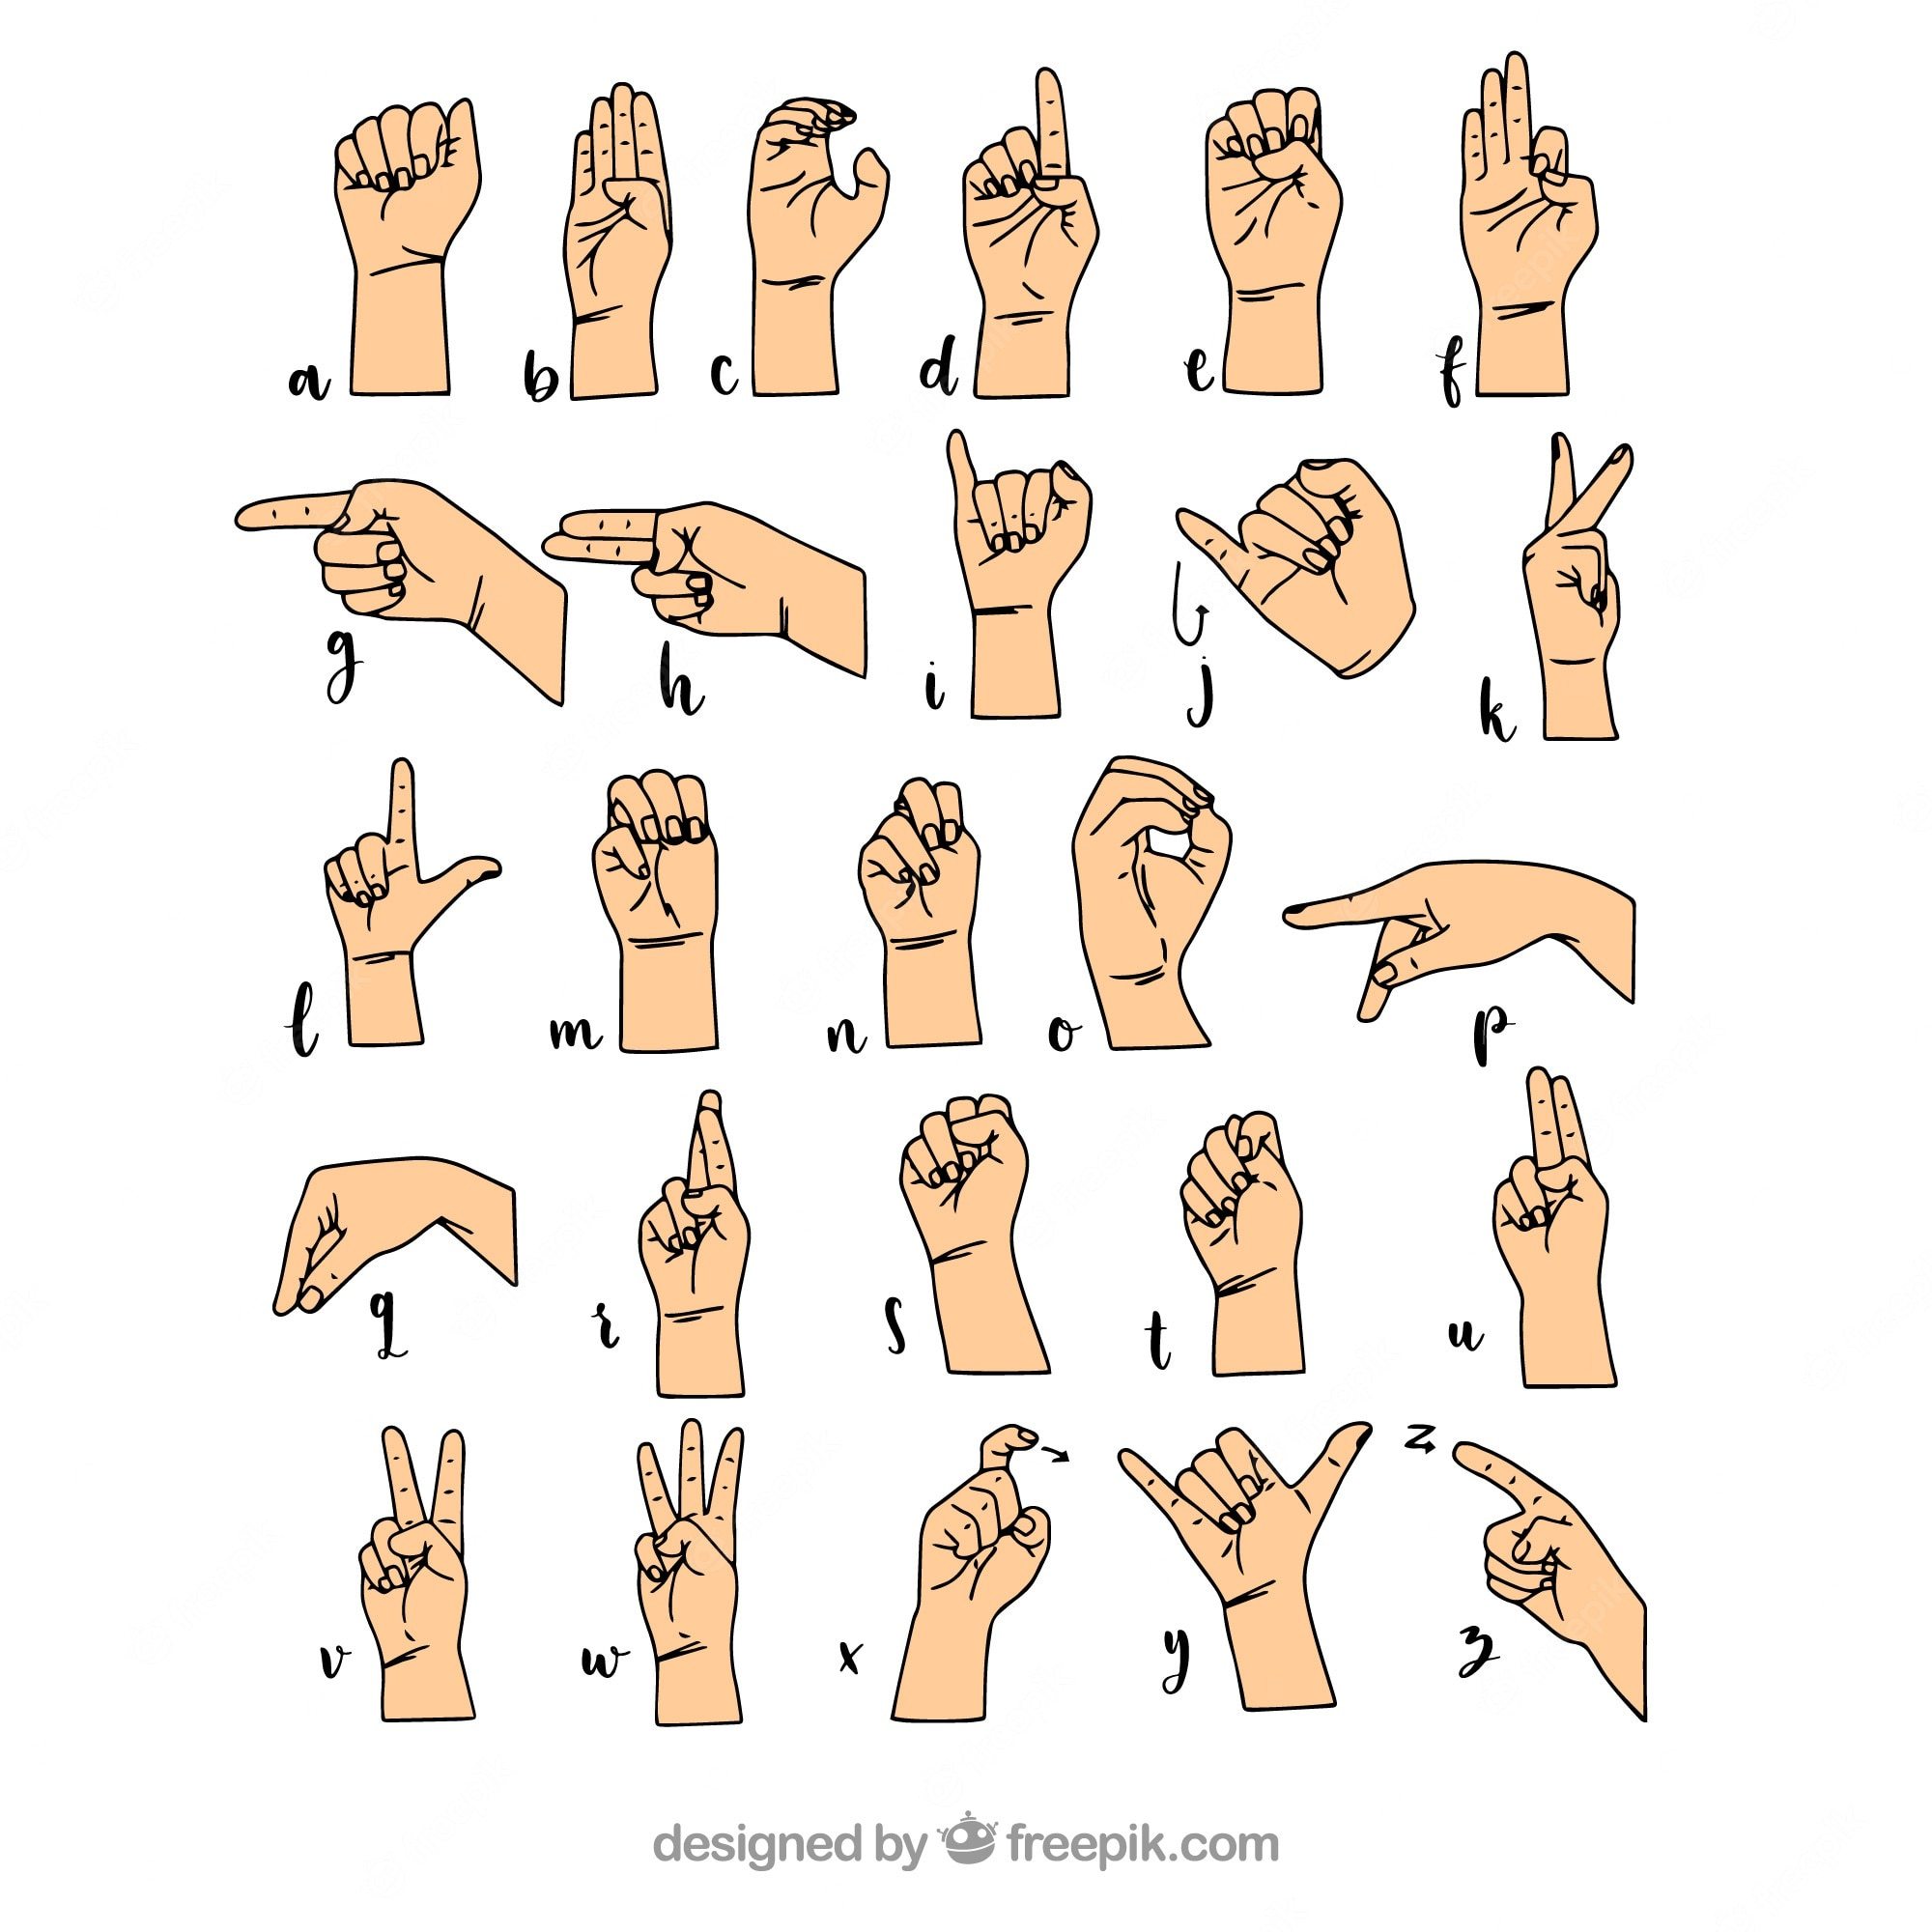 Sign Language - Class 6 - Quizizz